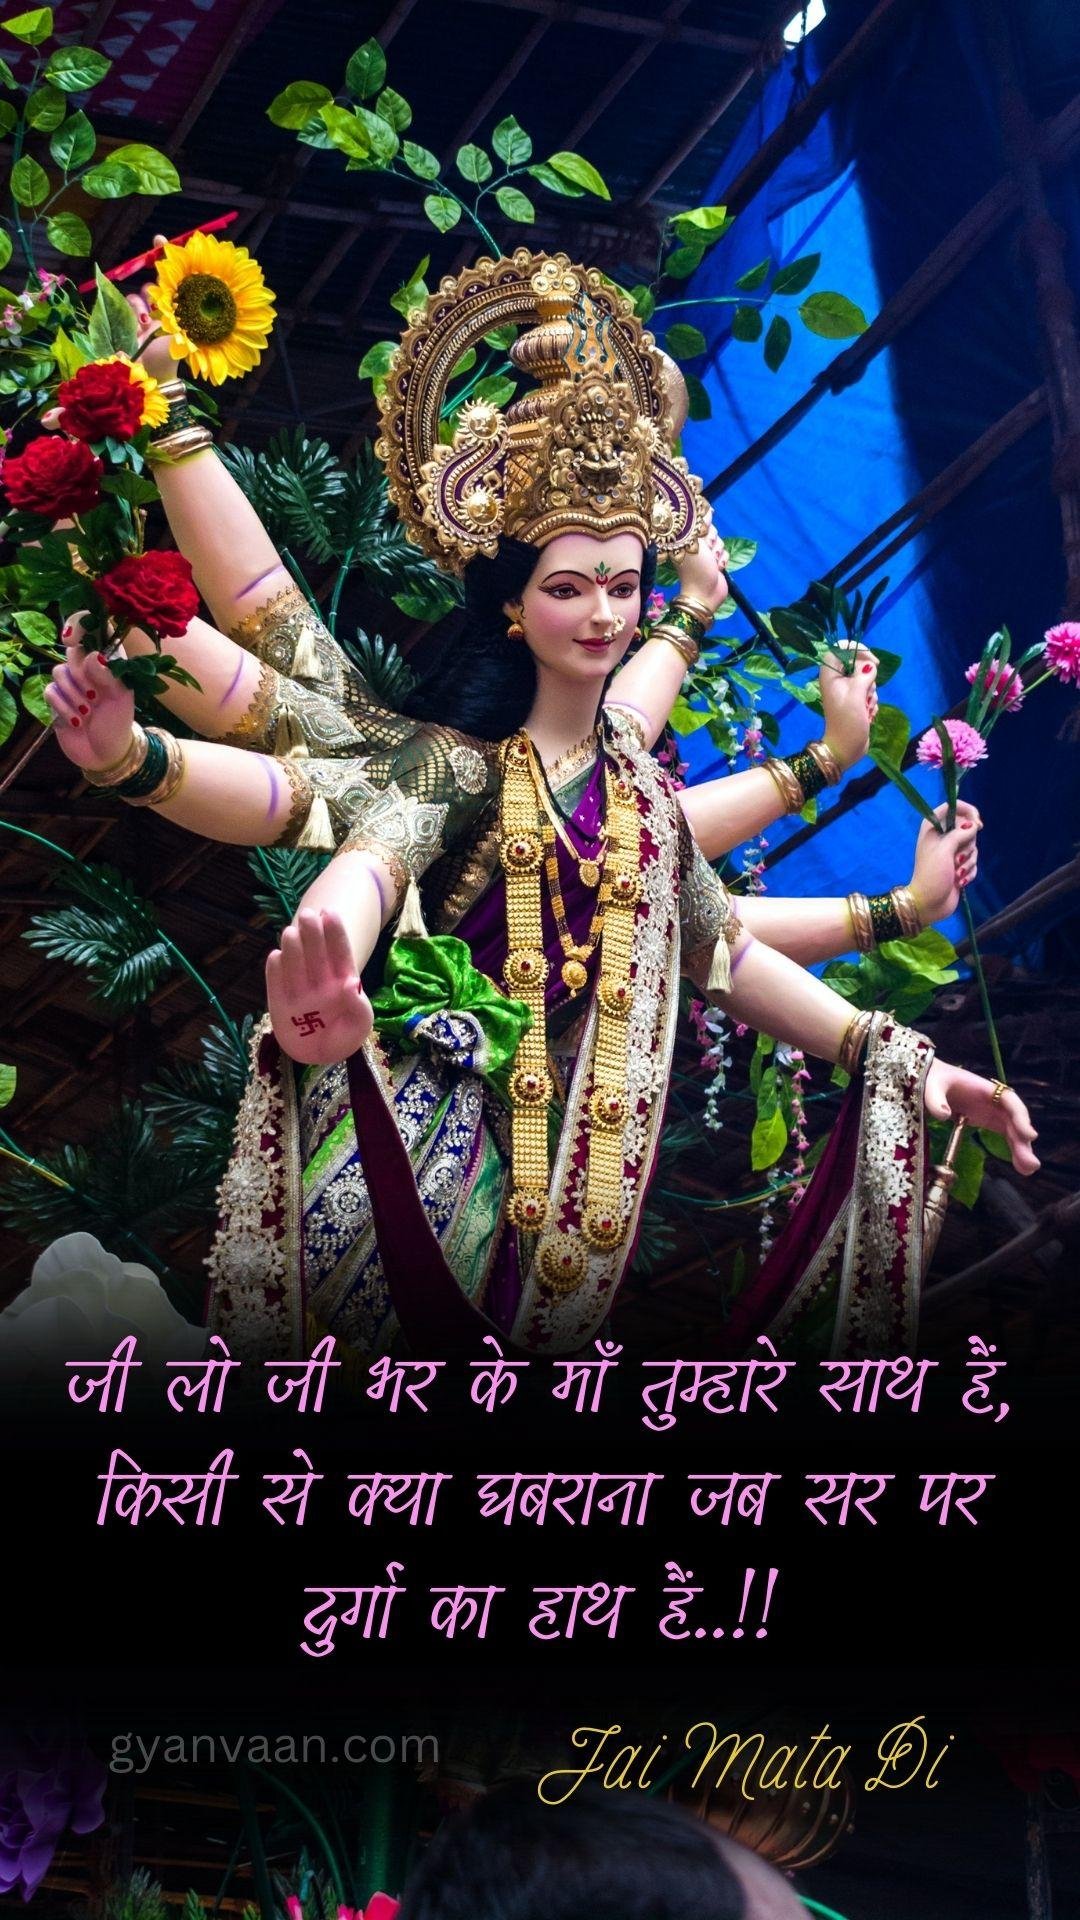 Navratri Quotes In Hindi With Shayari And Wishes For Whatsapp Status Image 42 - Navratri Quotes In Hindi